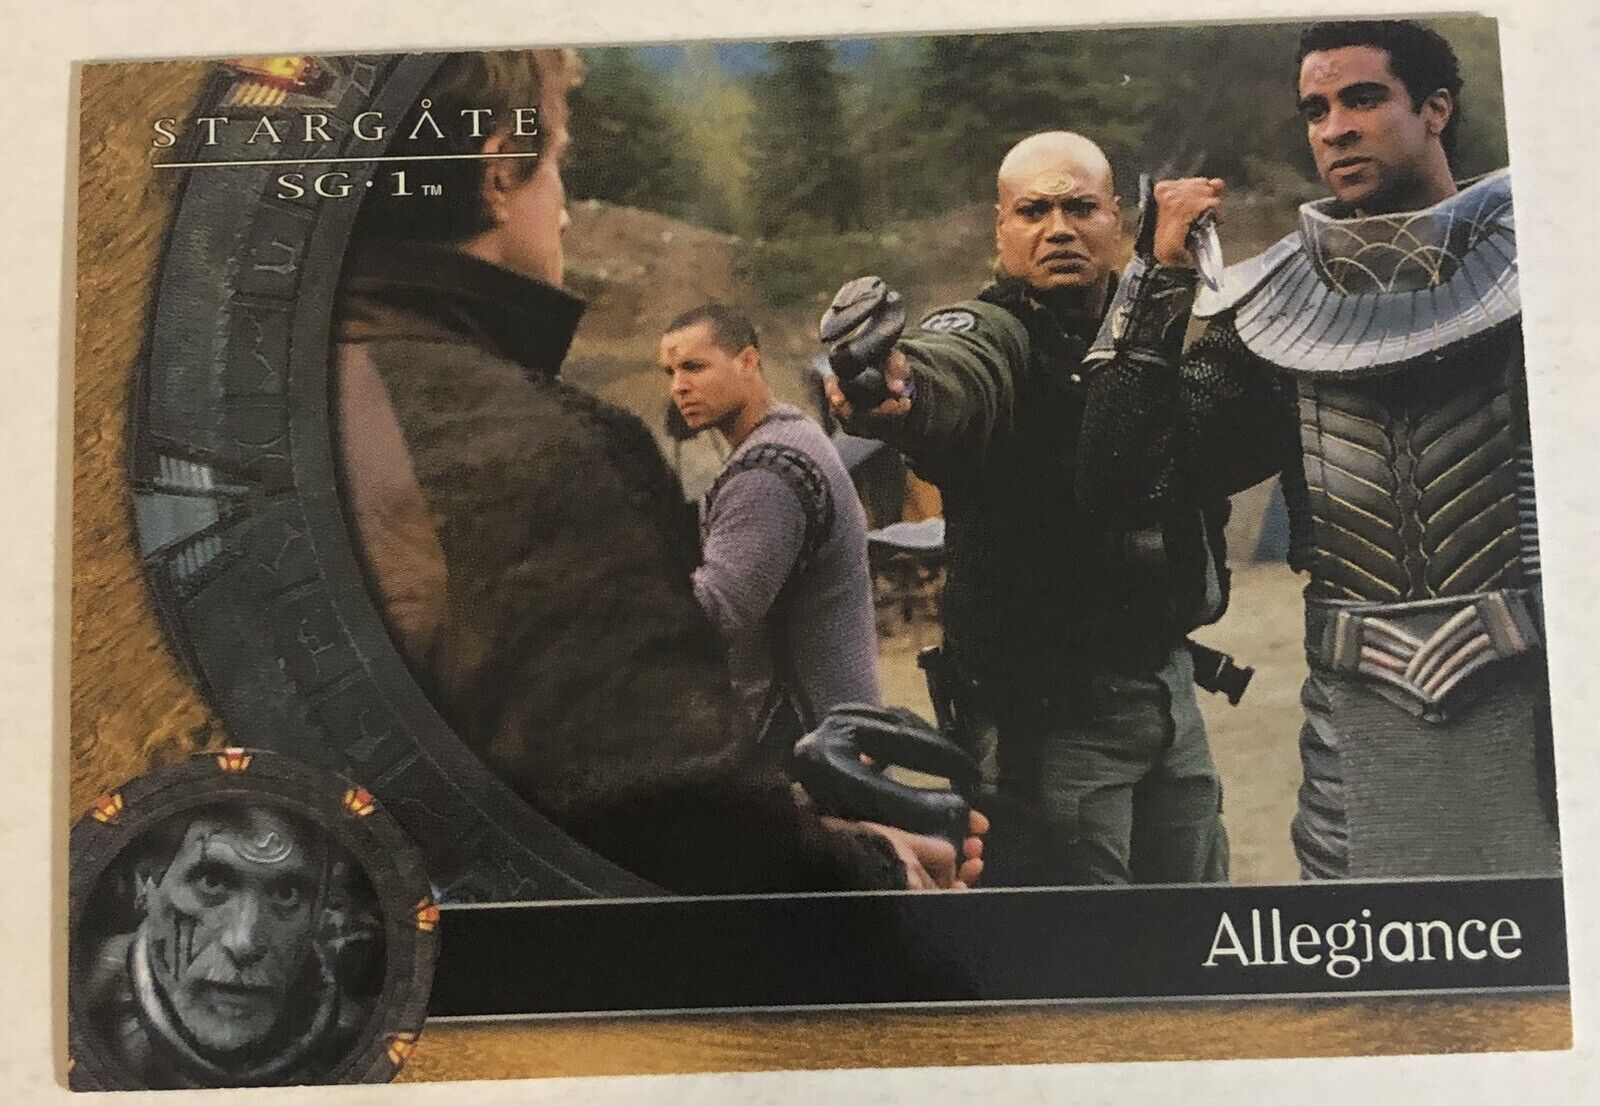 Stargate SG1 Trading Card Richard Dean Anderson #29 Christopher Judge